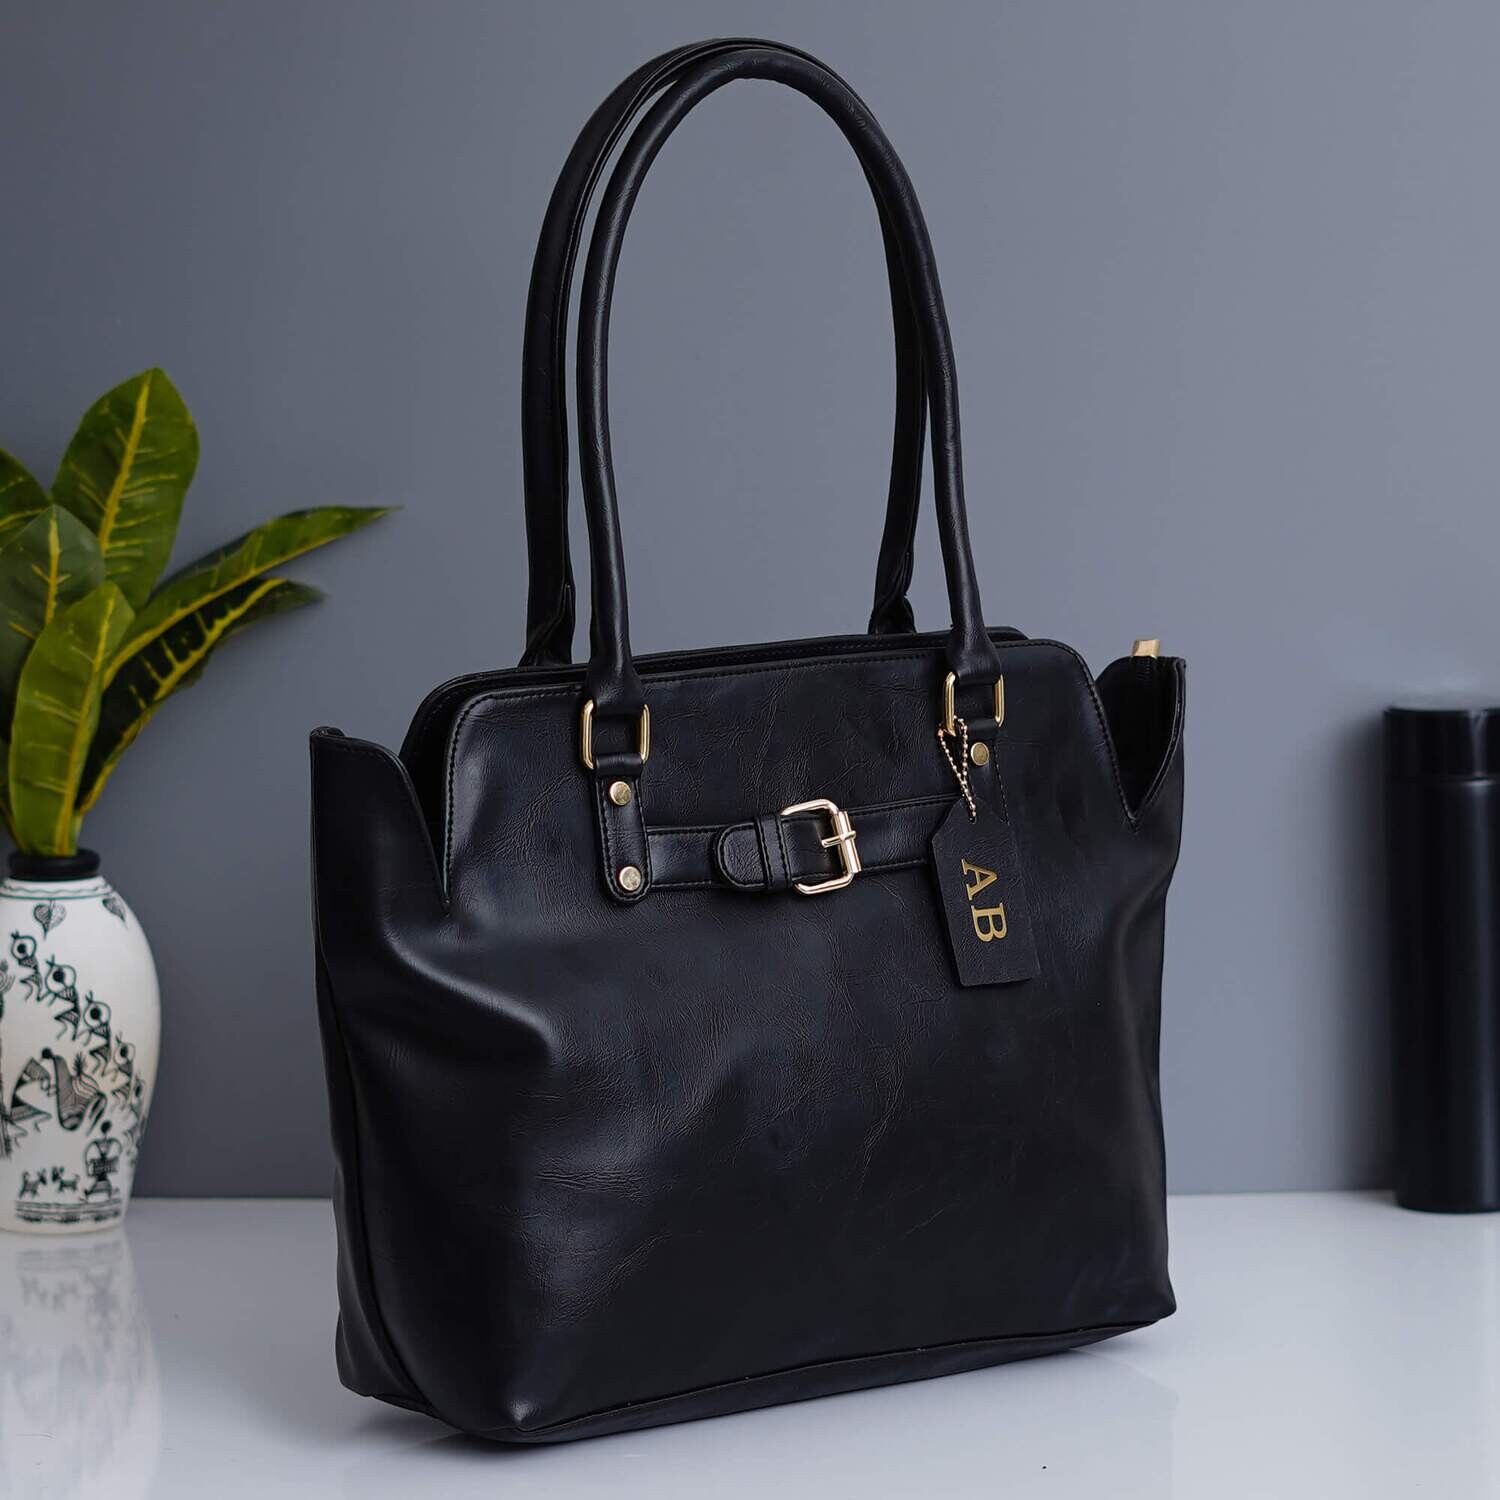 Black Premium Personalised Tote Bag with Zip